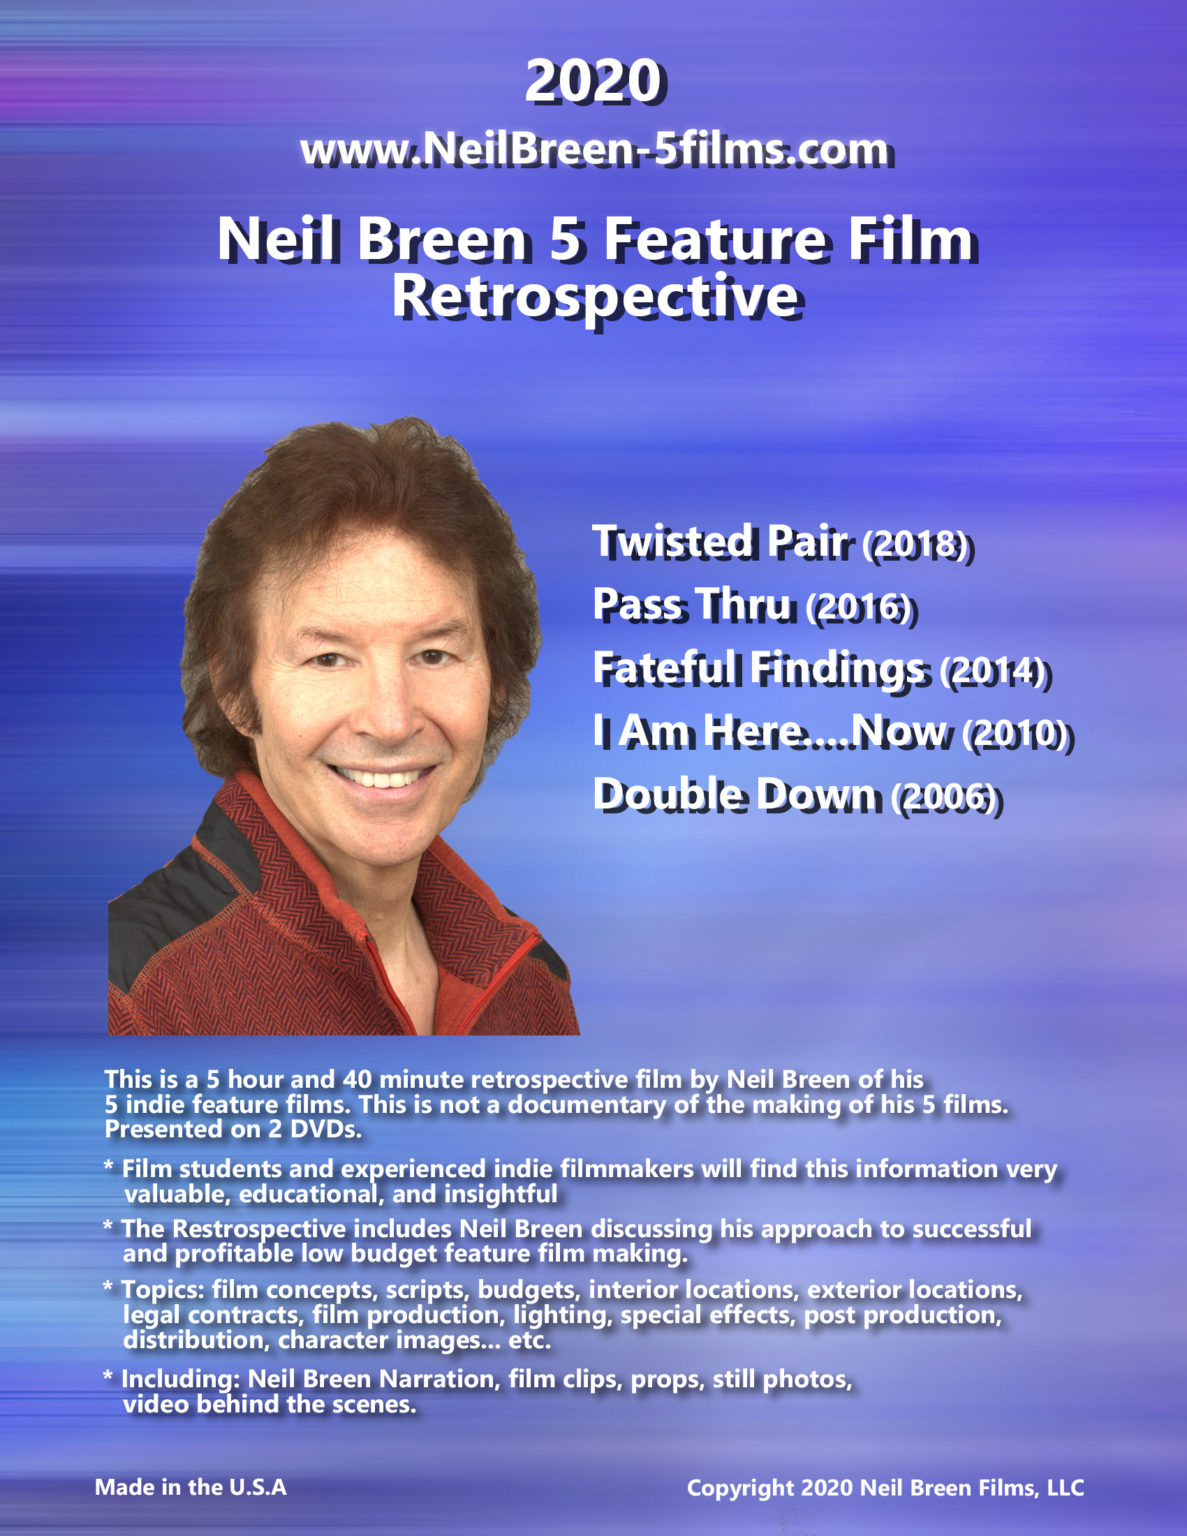 Neil-Breen-Retrospective-8-and-a-half-x-11-1187x1536.jpg